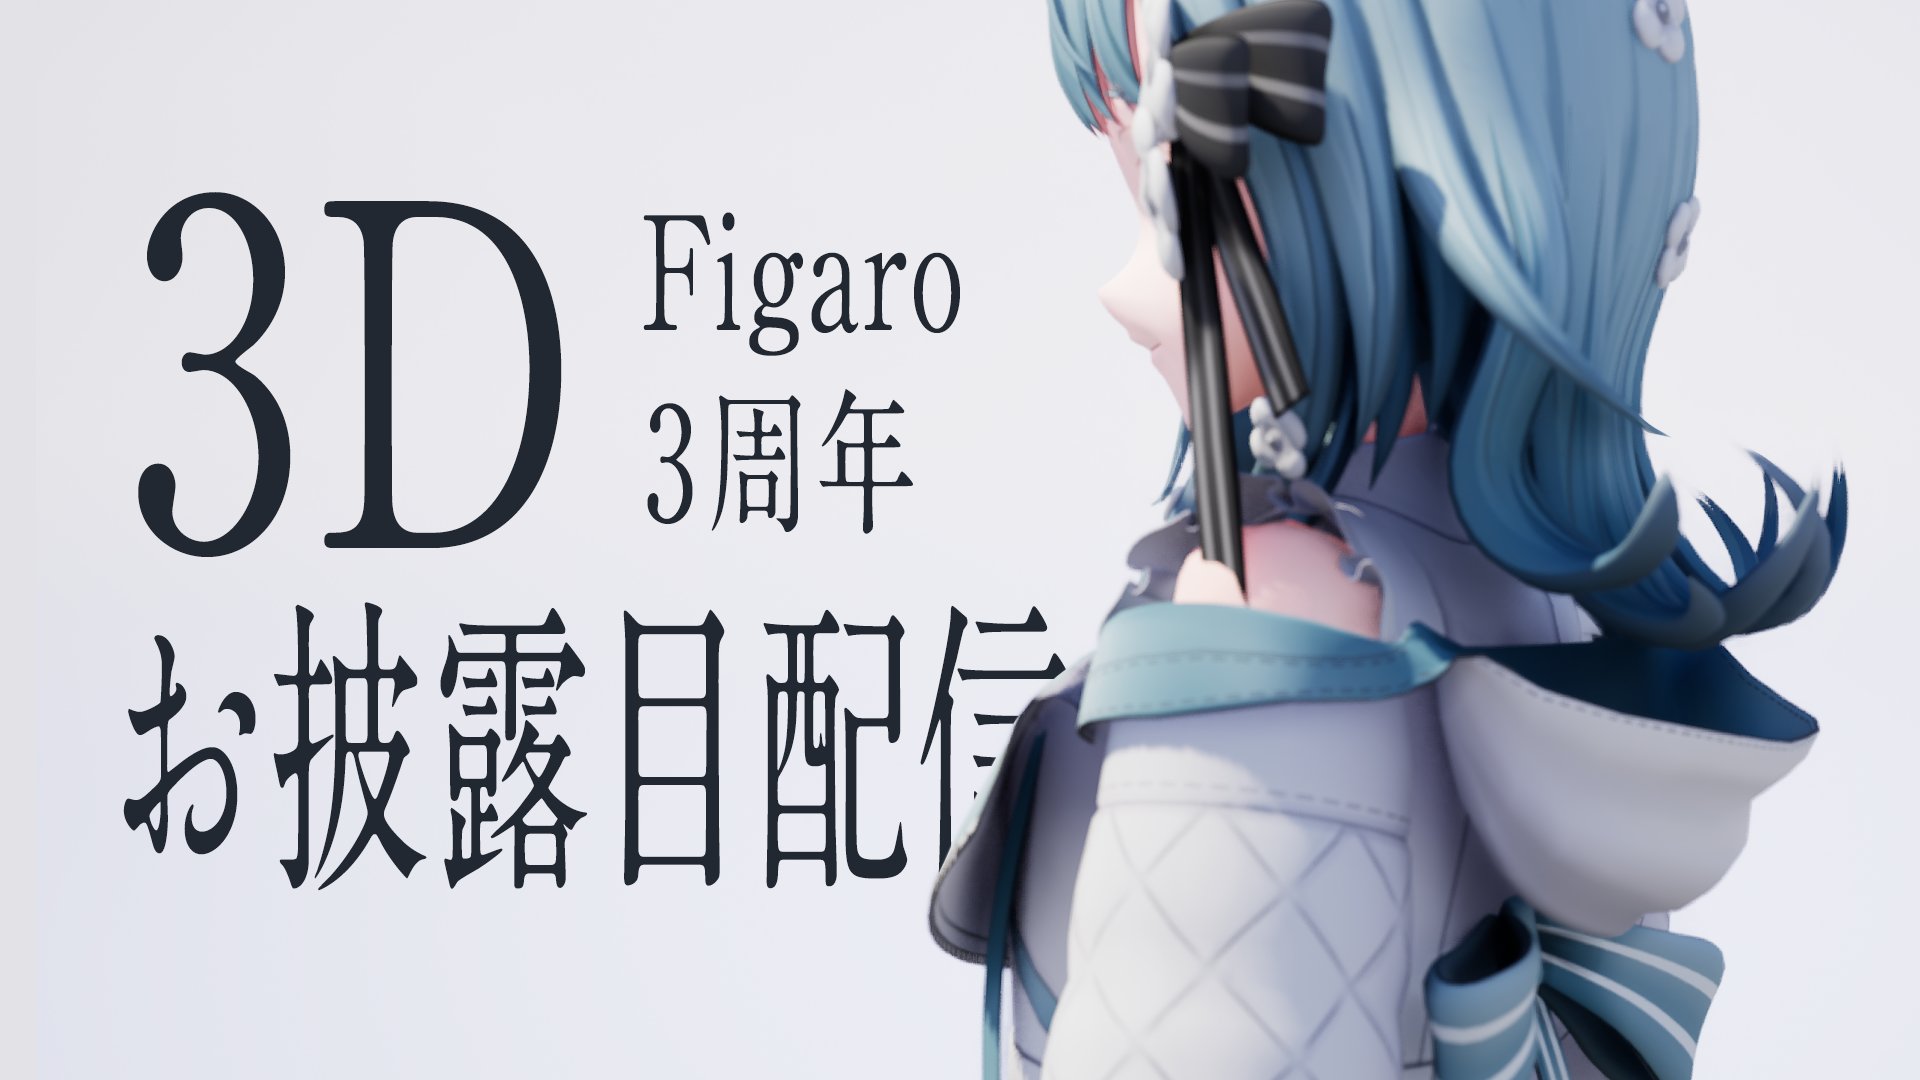 [Vtub] Figaro 3D披露Live 今晚7點(台灣時間)